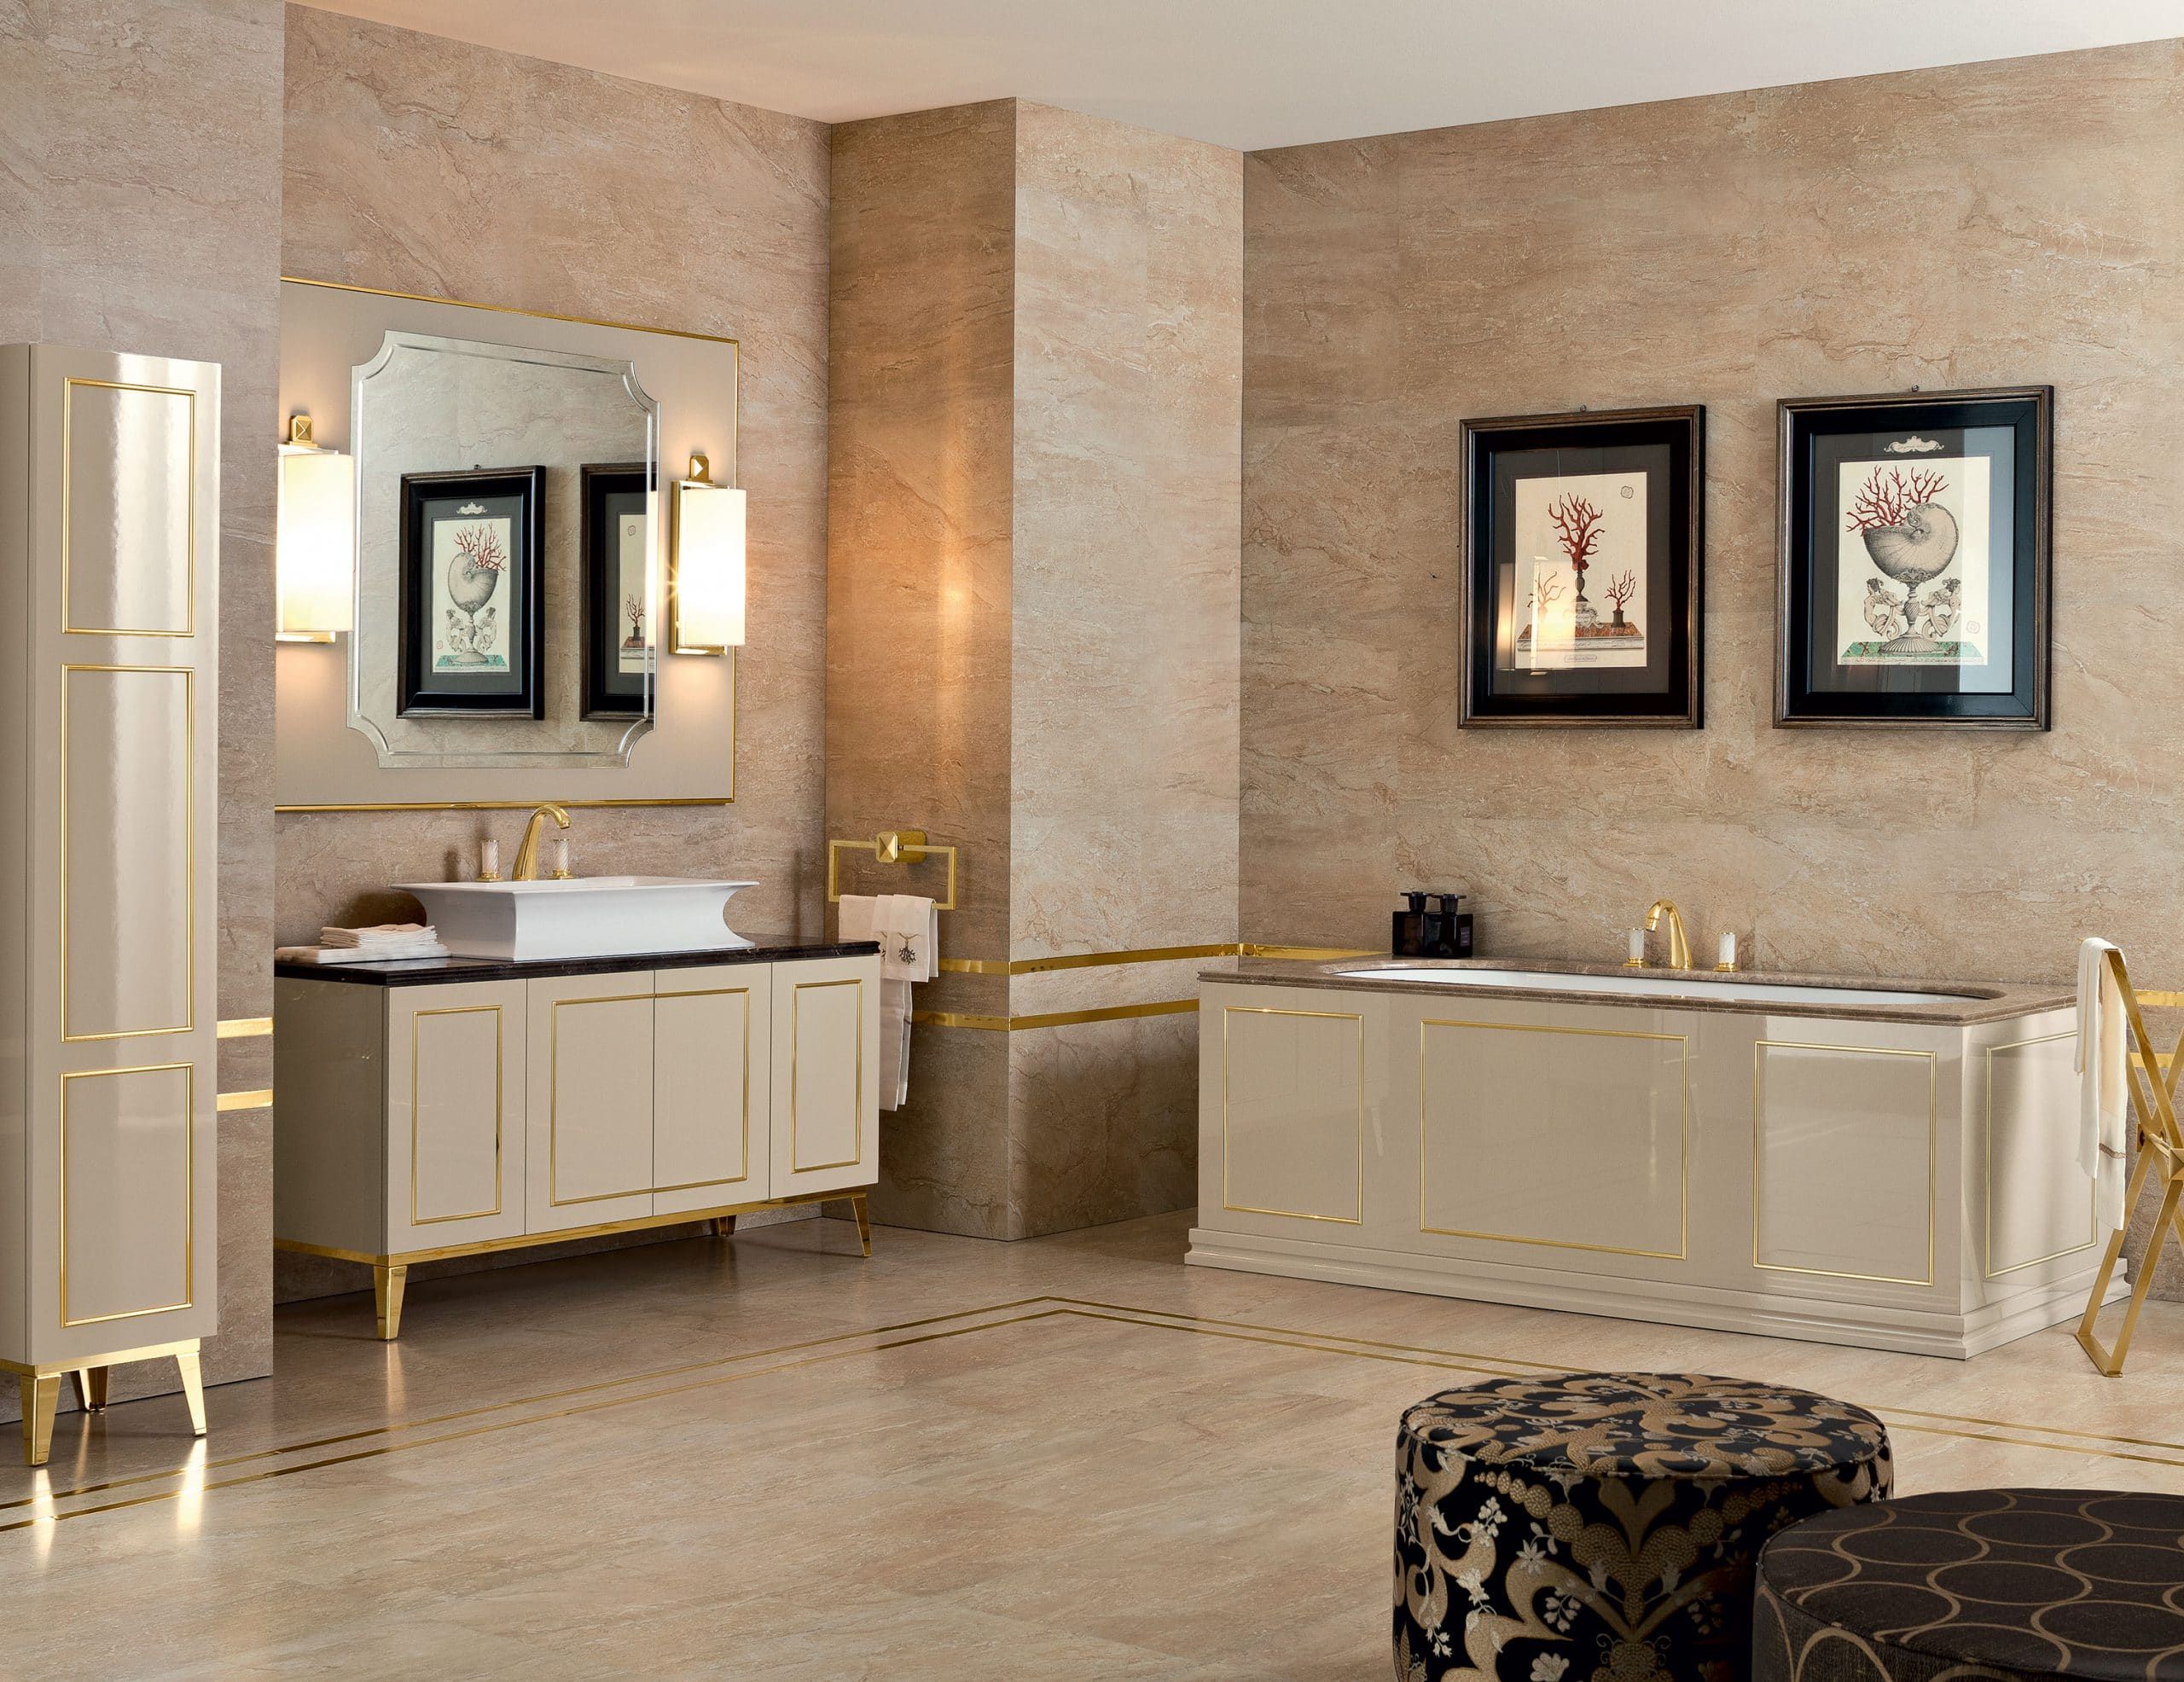 Rivoli contemporary Italian bathroom vanity with gold lacquered wood